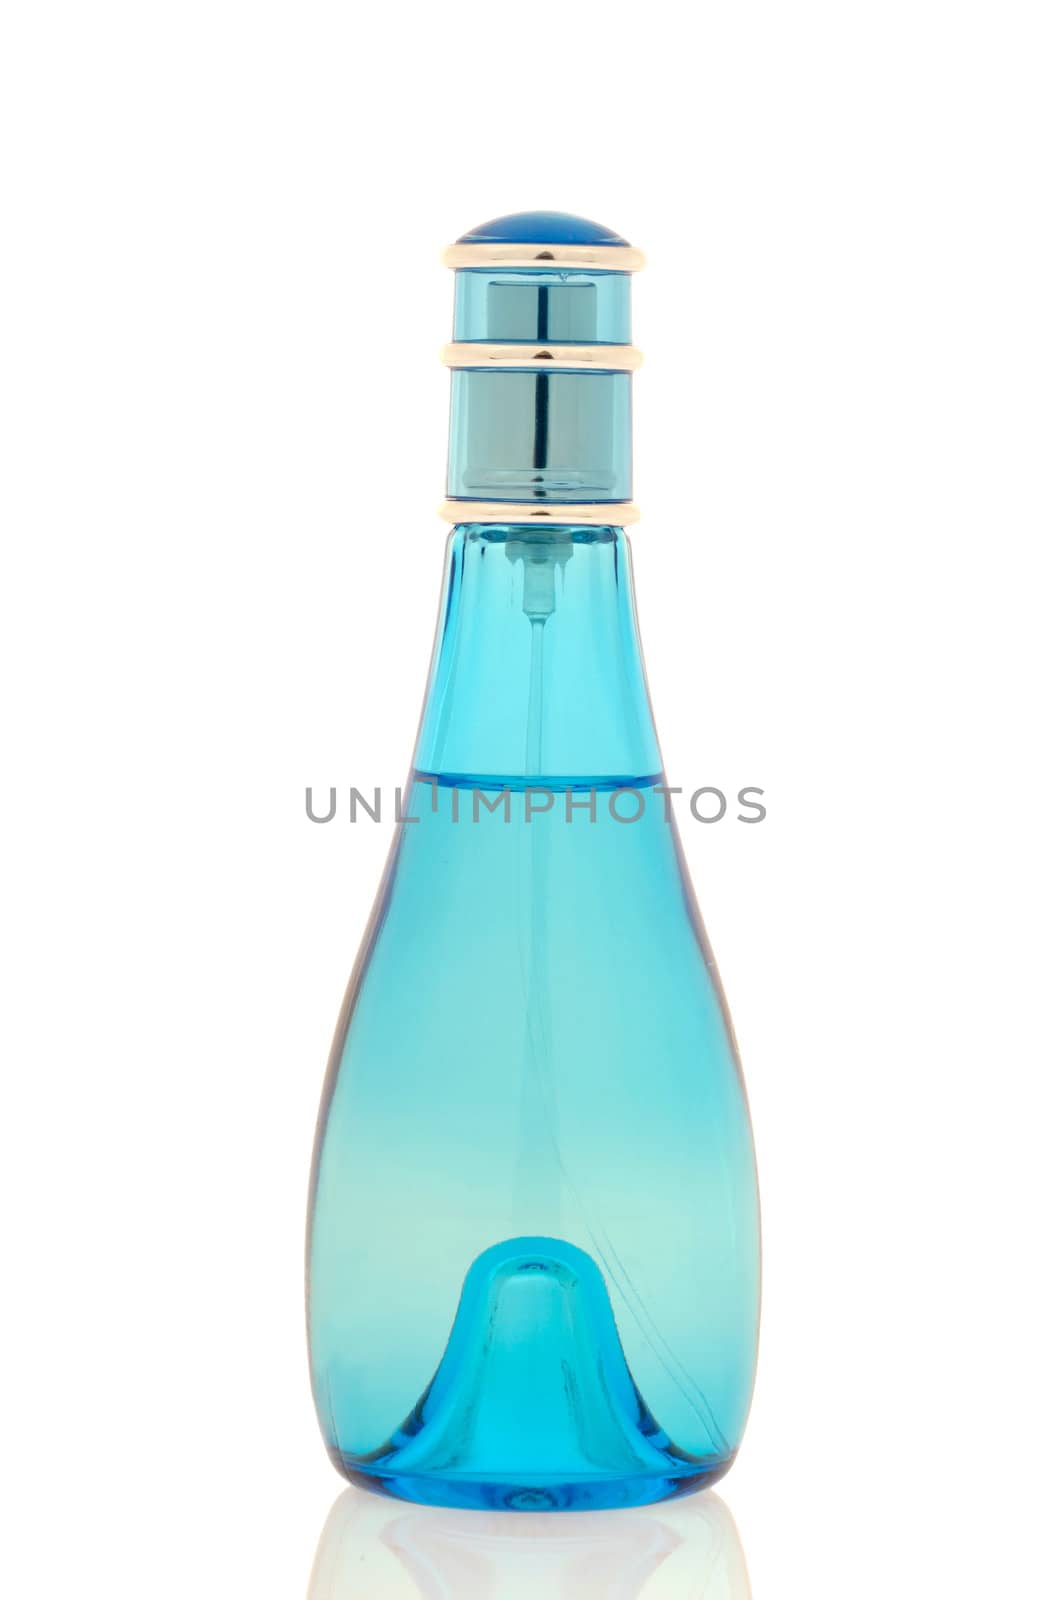 Elegant perfume bottle by cfoto